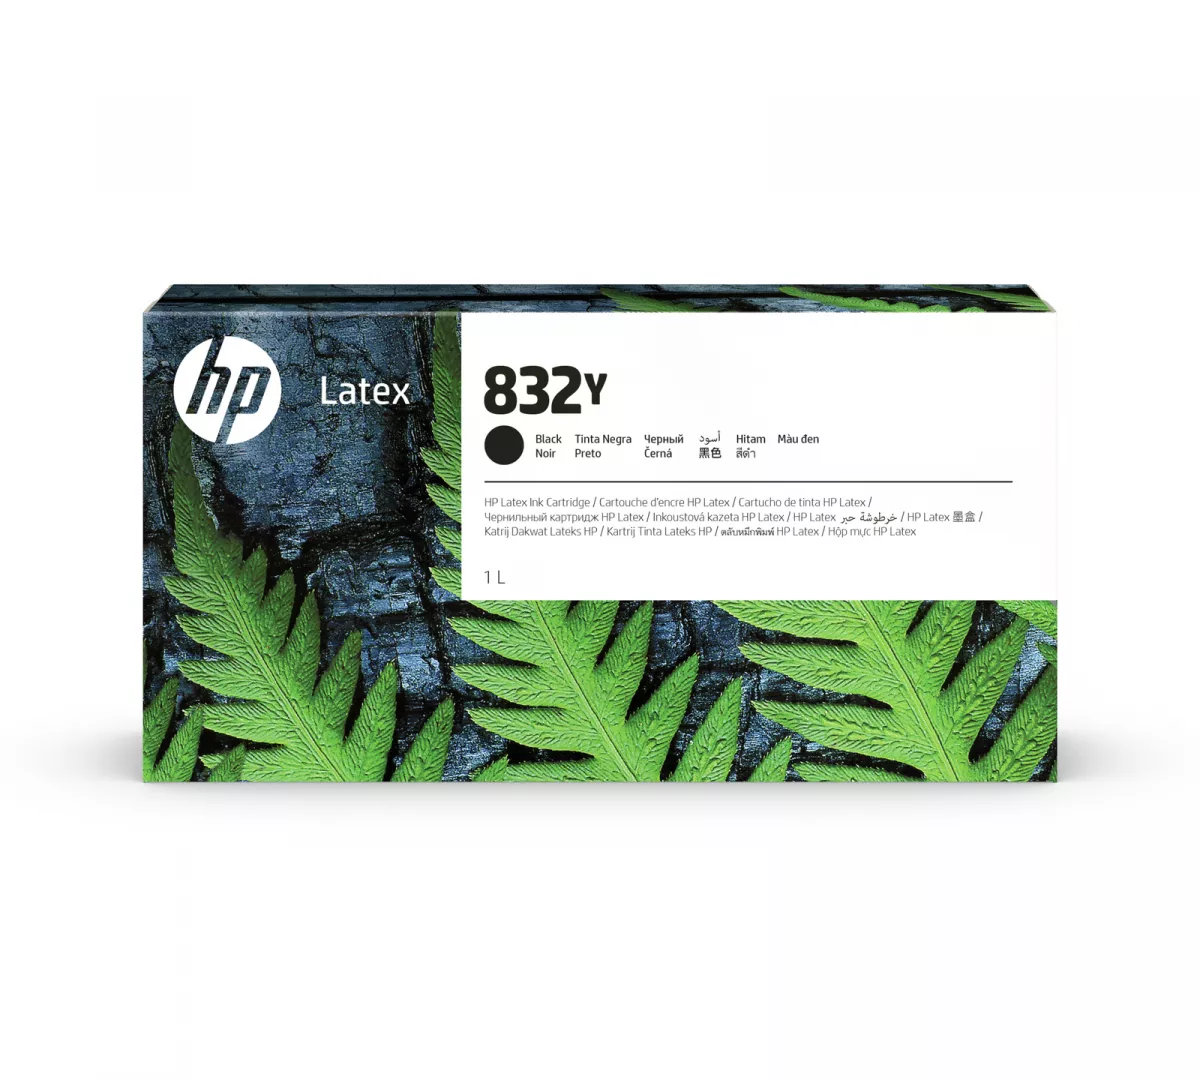 Consumabile imprimante - HP 832Y Black Latex Ink Cartridge 1 L, transilvae.ro